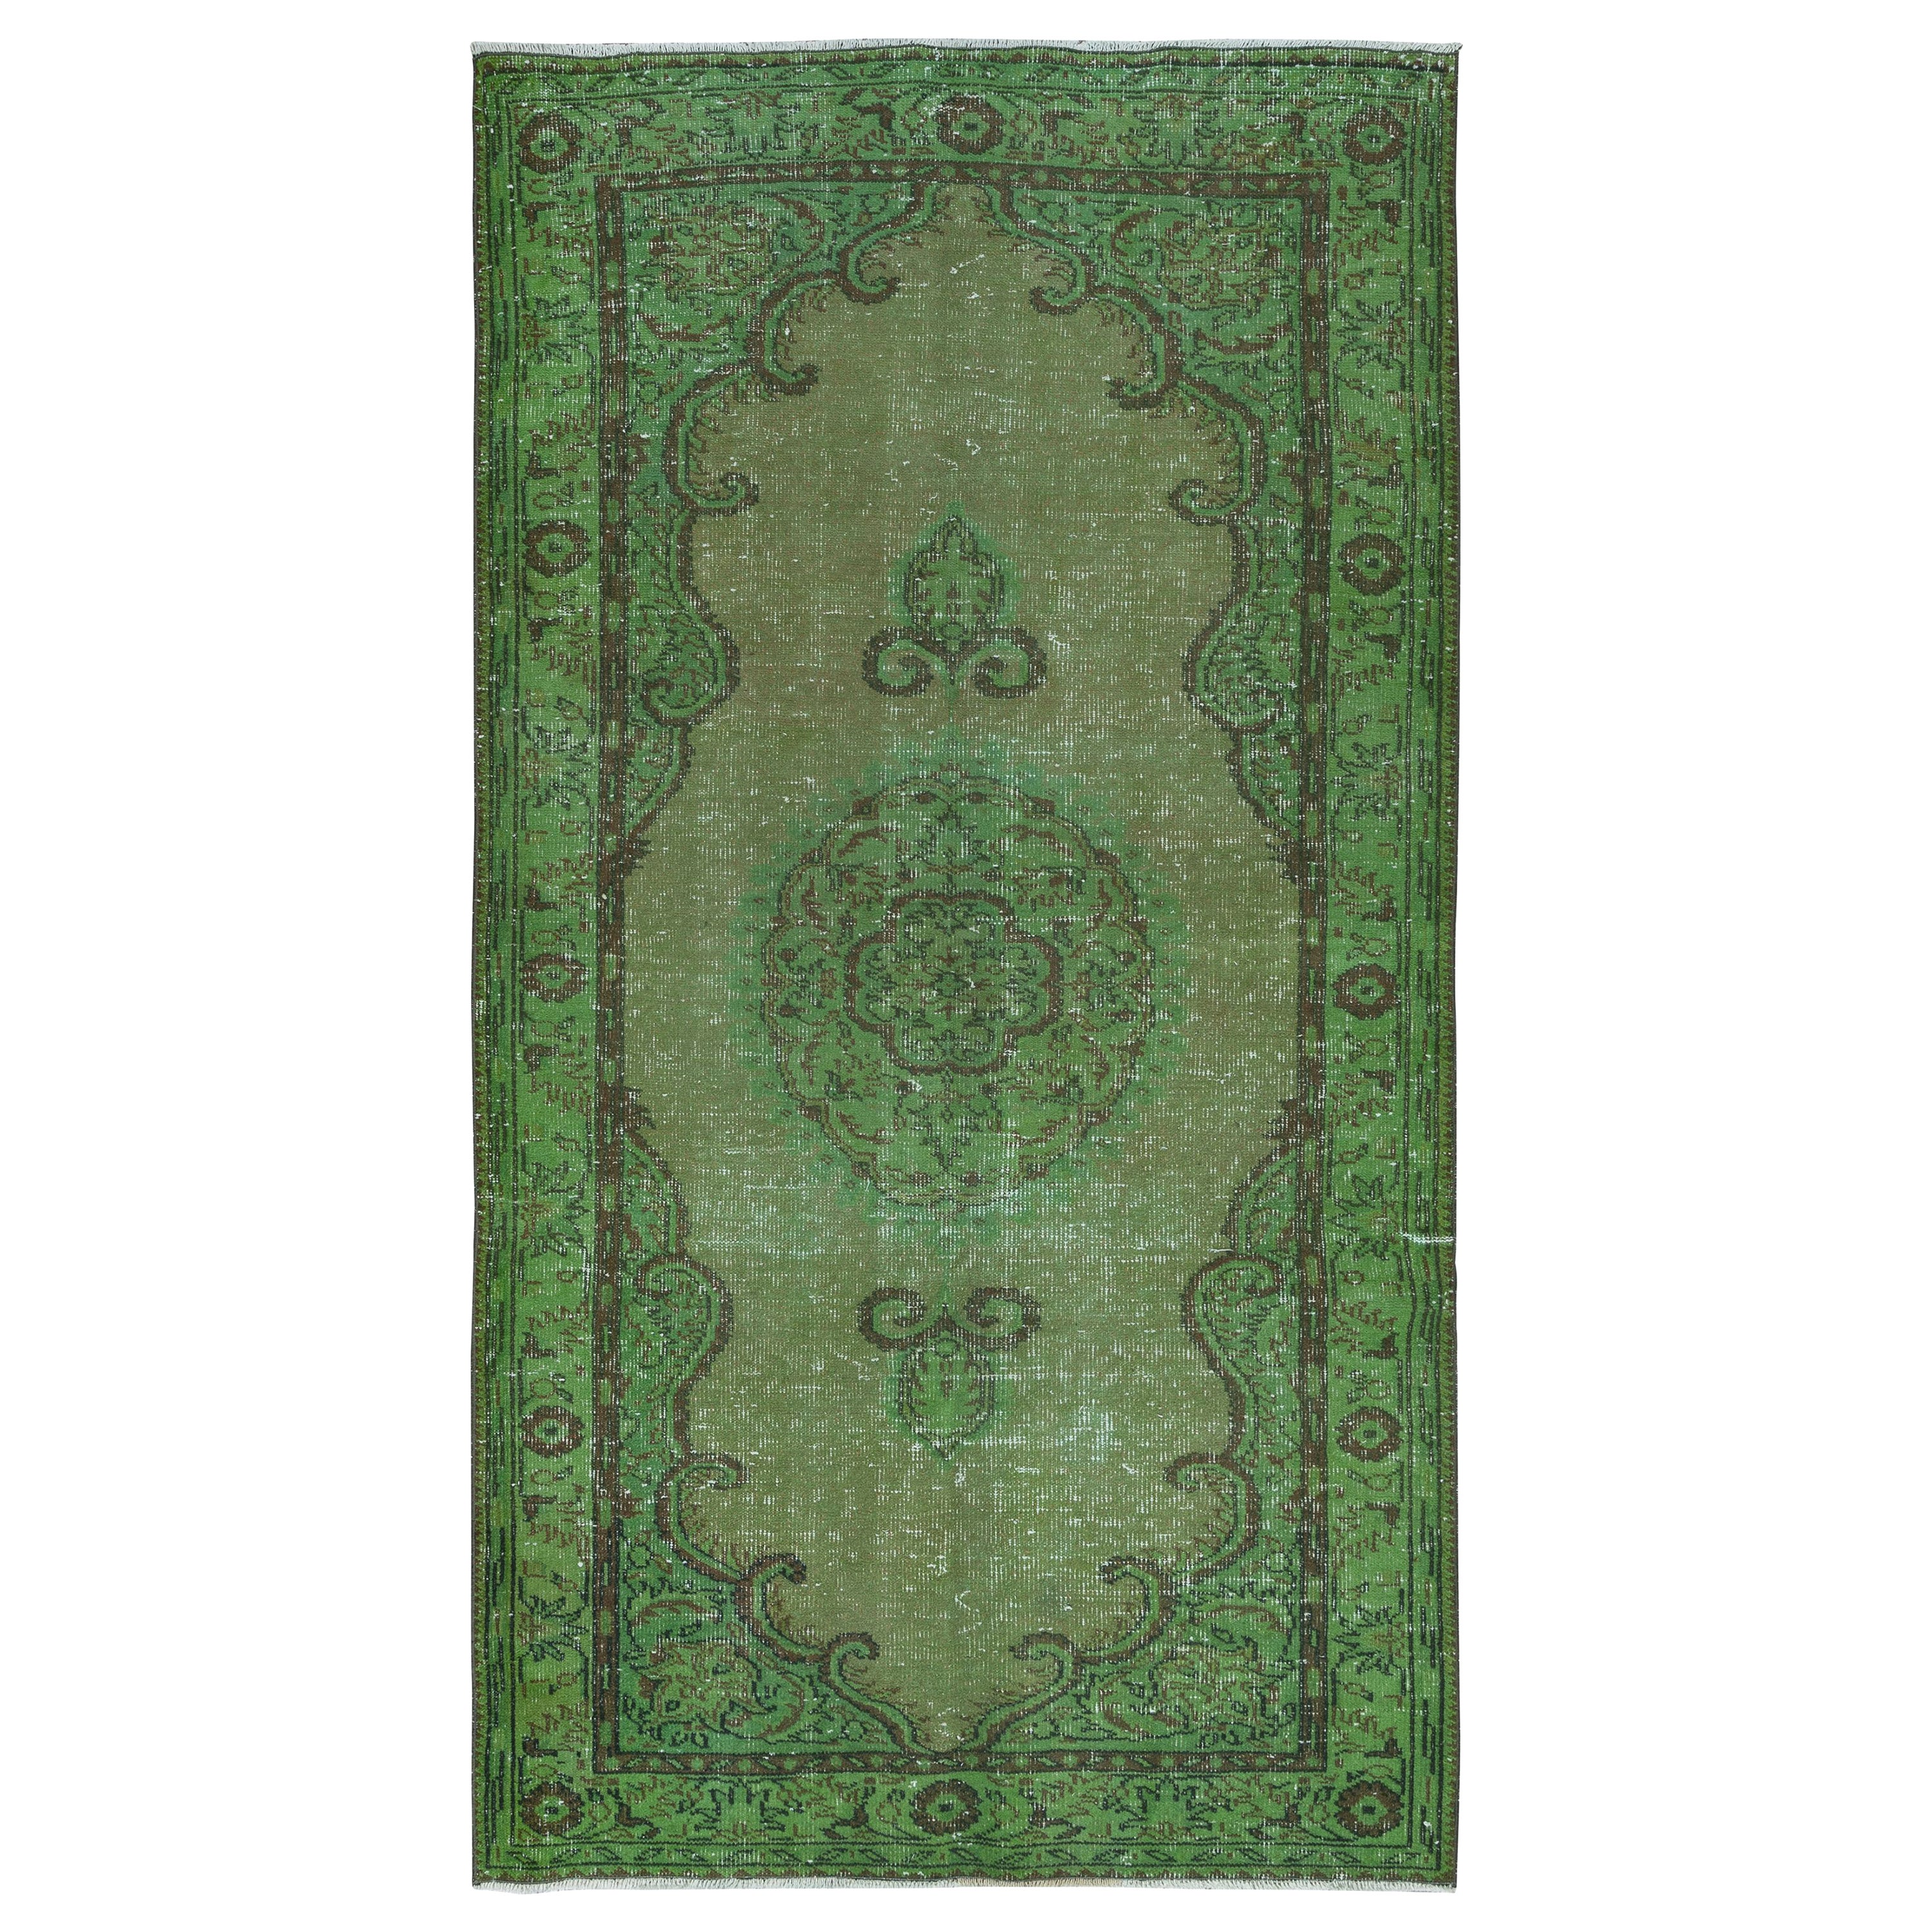 5x9 Ft Handmade Green Carpet from Turkey, Modern Living Room Decor Rug (Tapis de décoration de salon moderne)